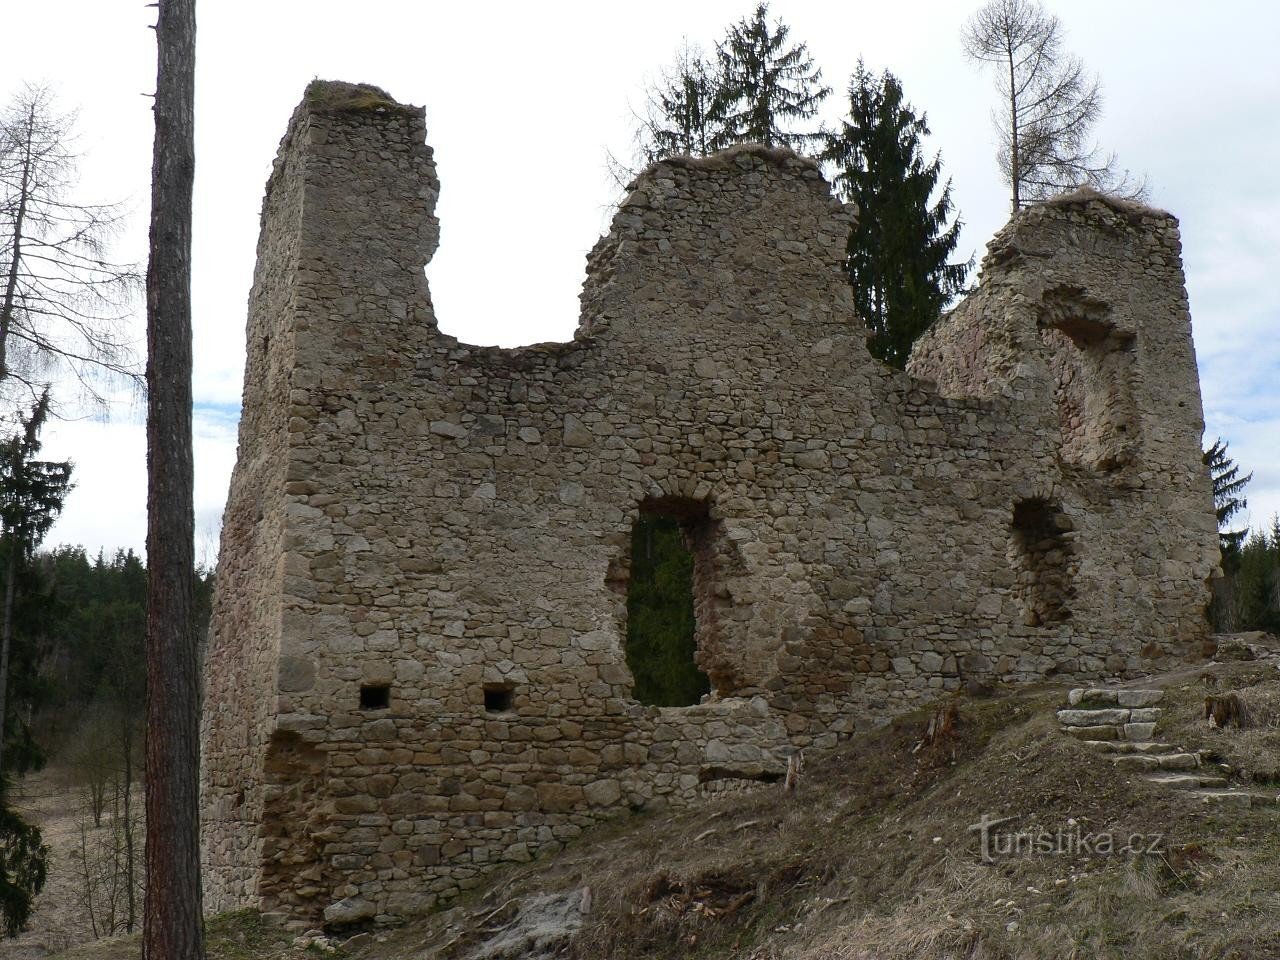 Porešín, παλάτι του κάστρου